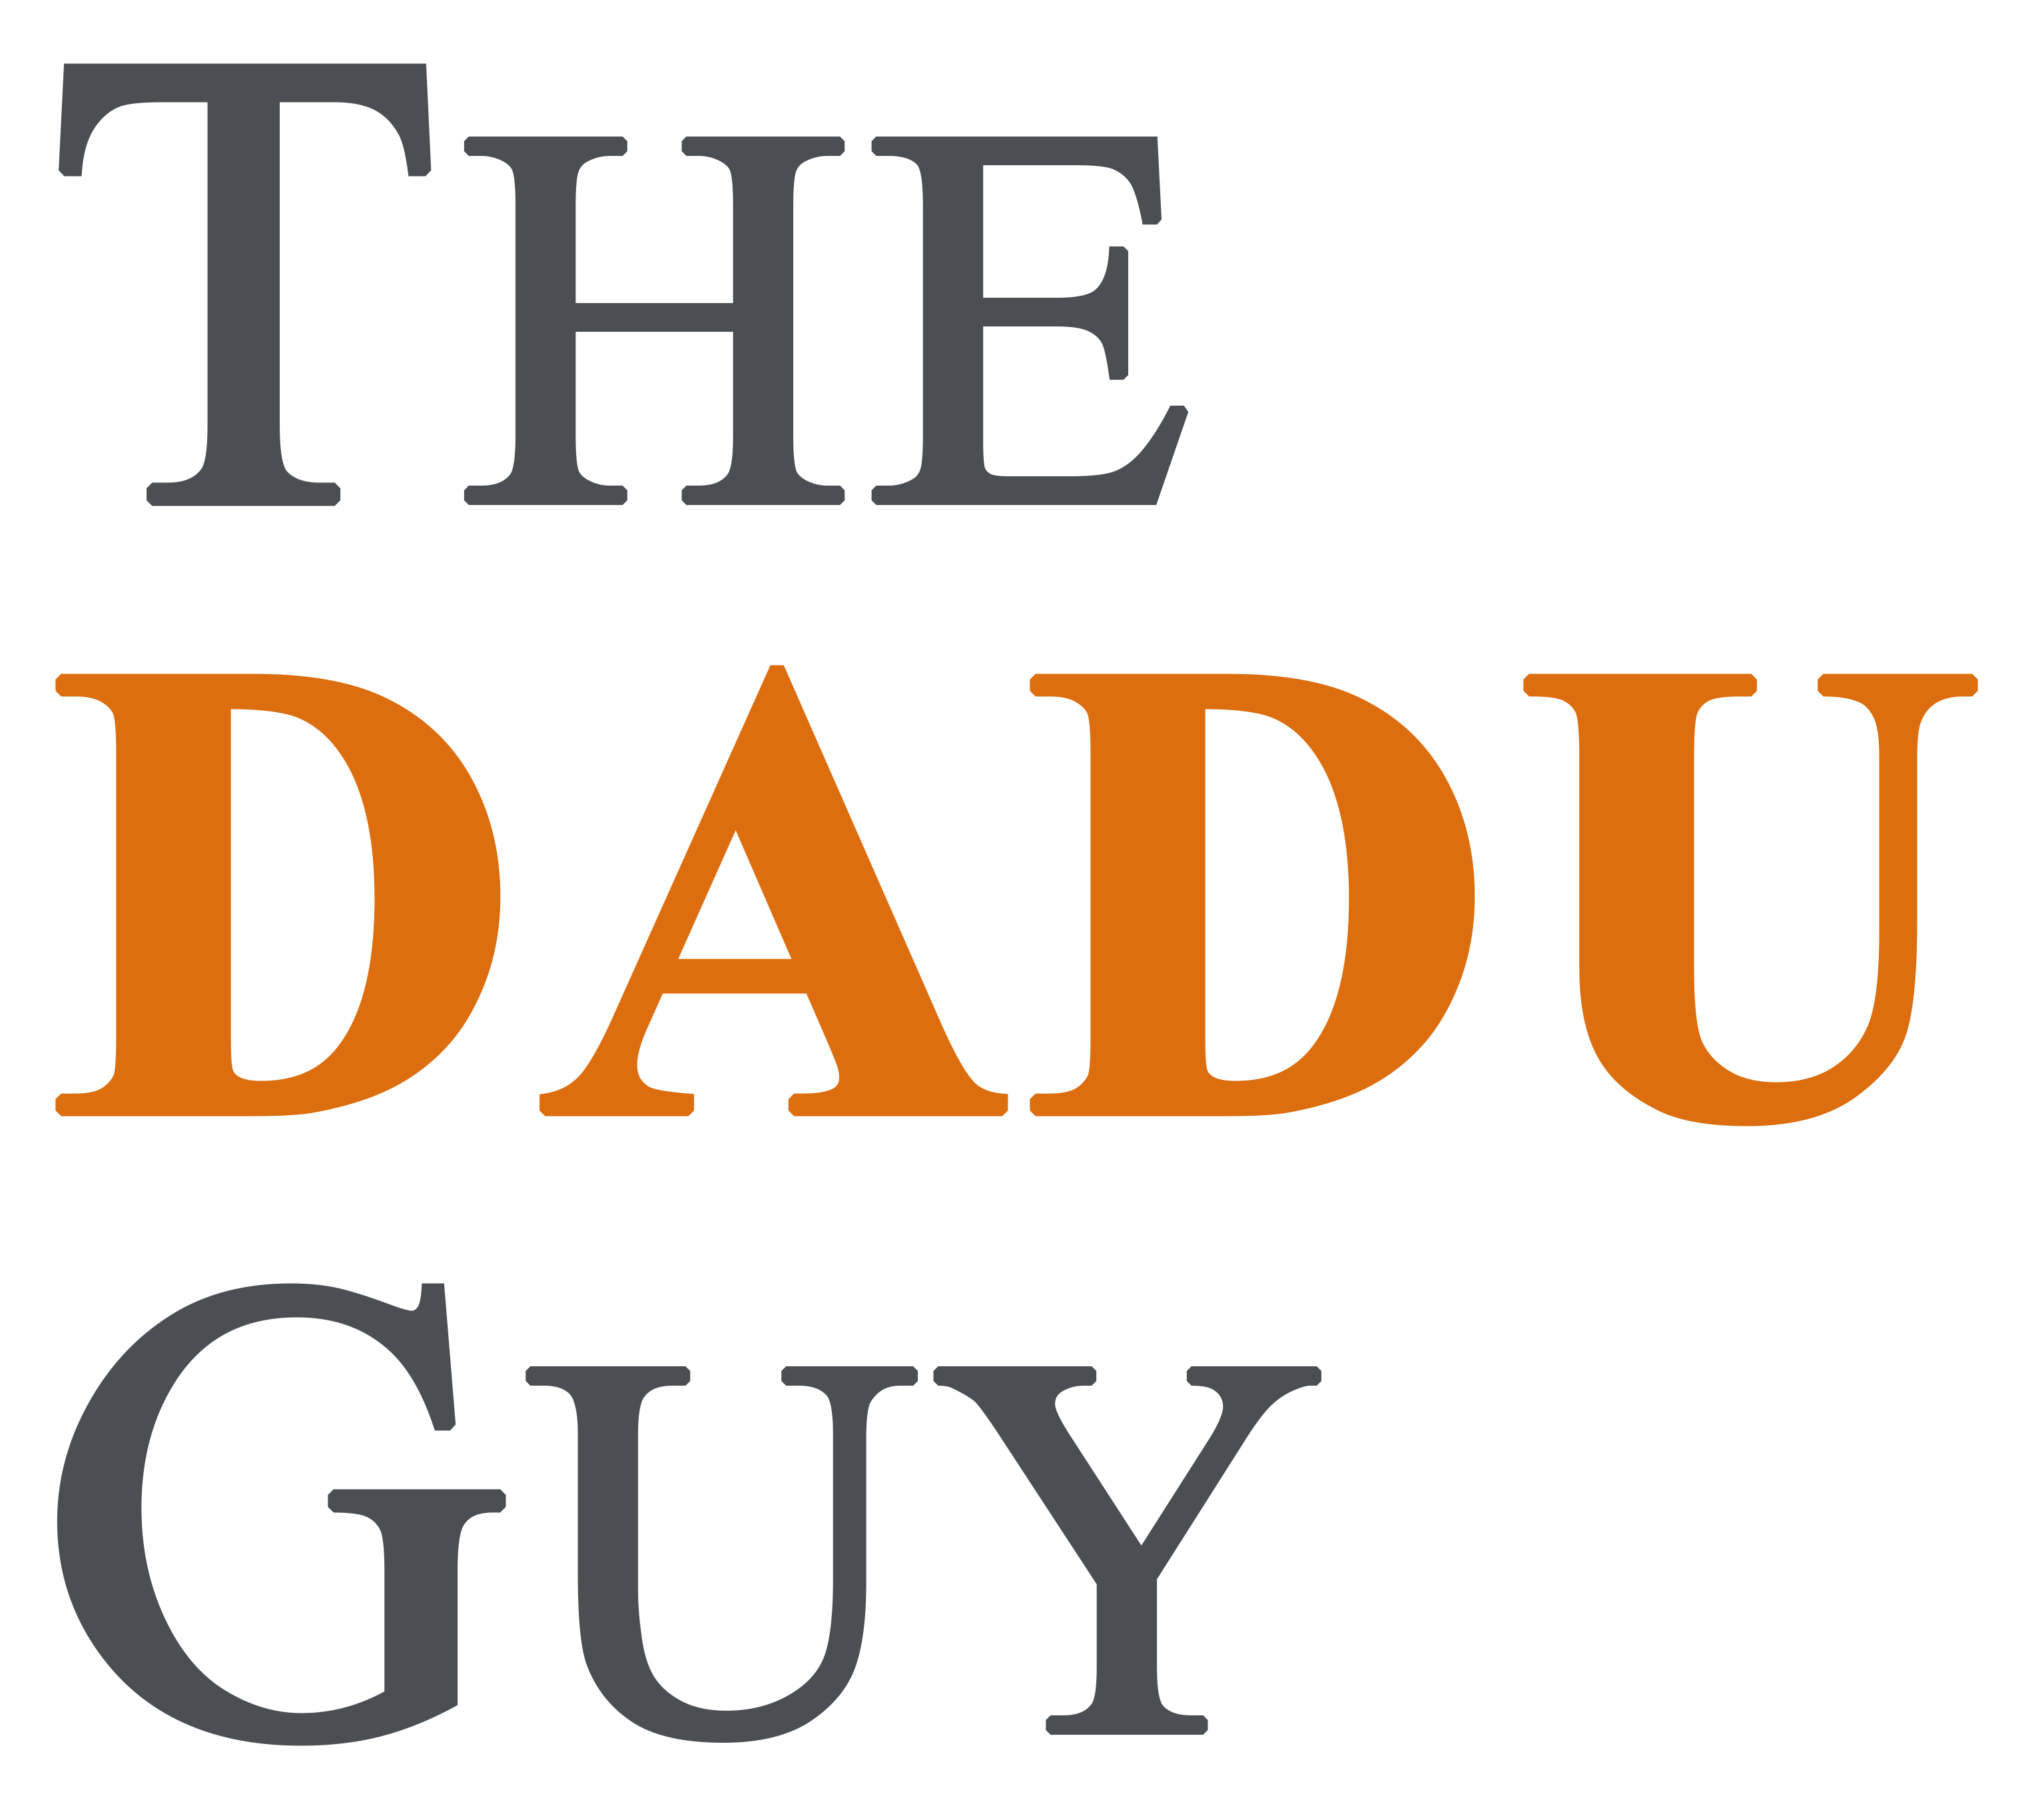 The DADU Guy